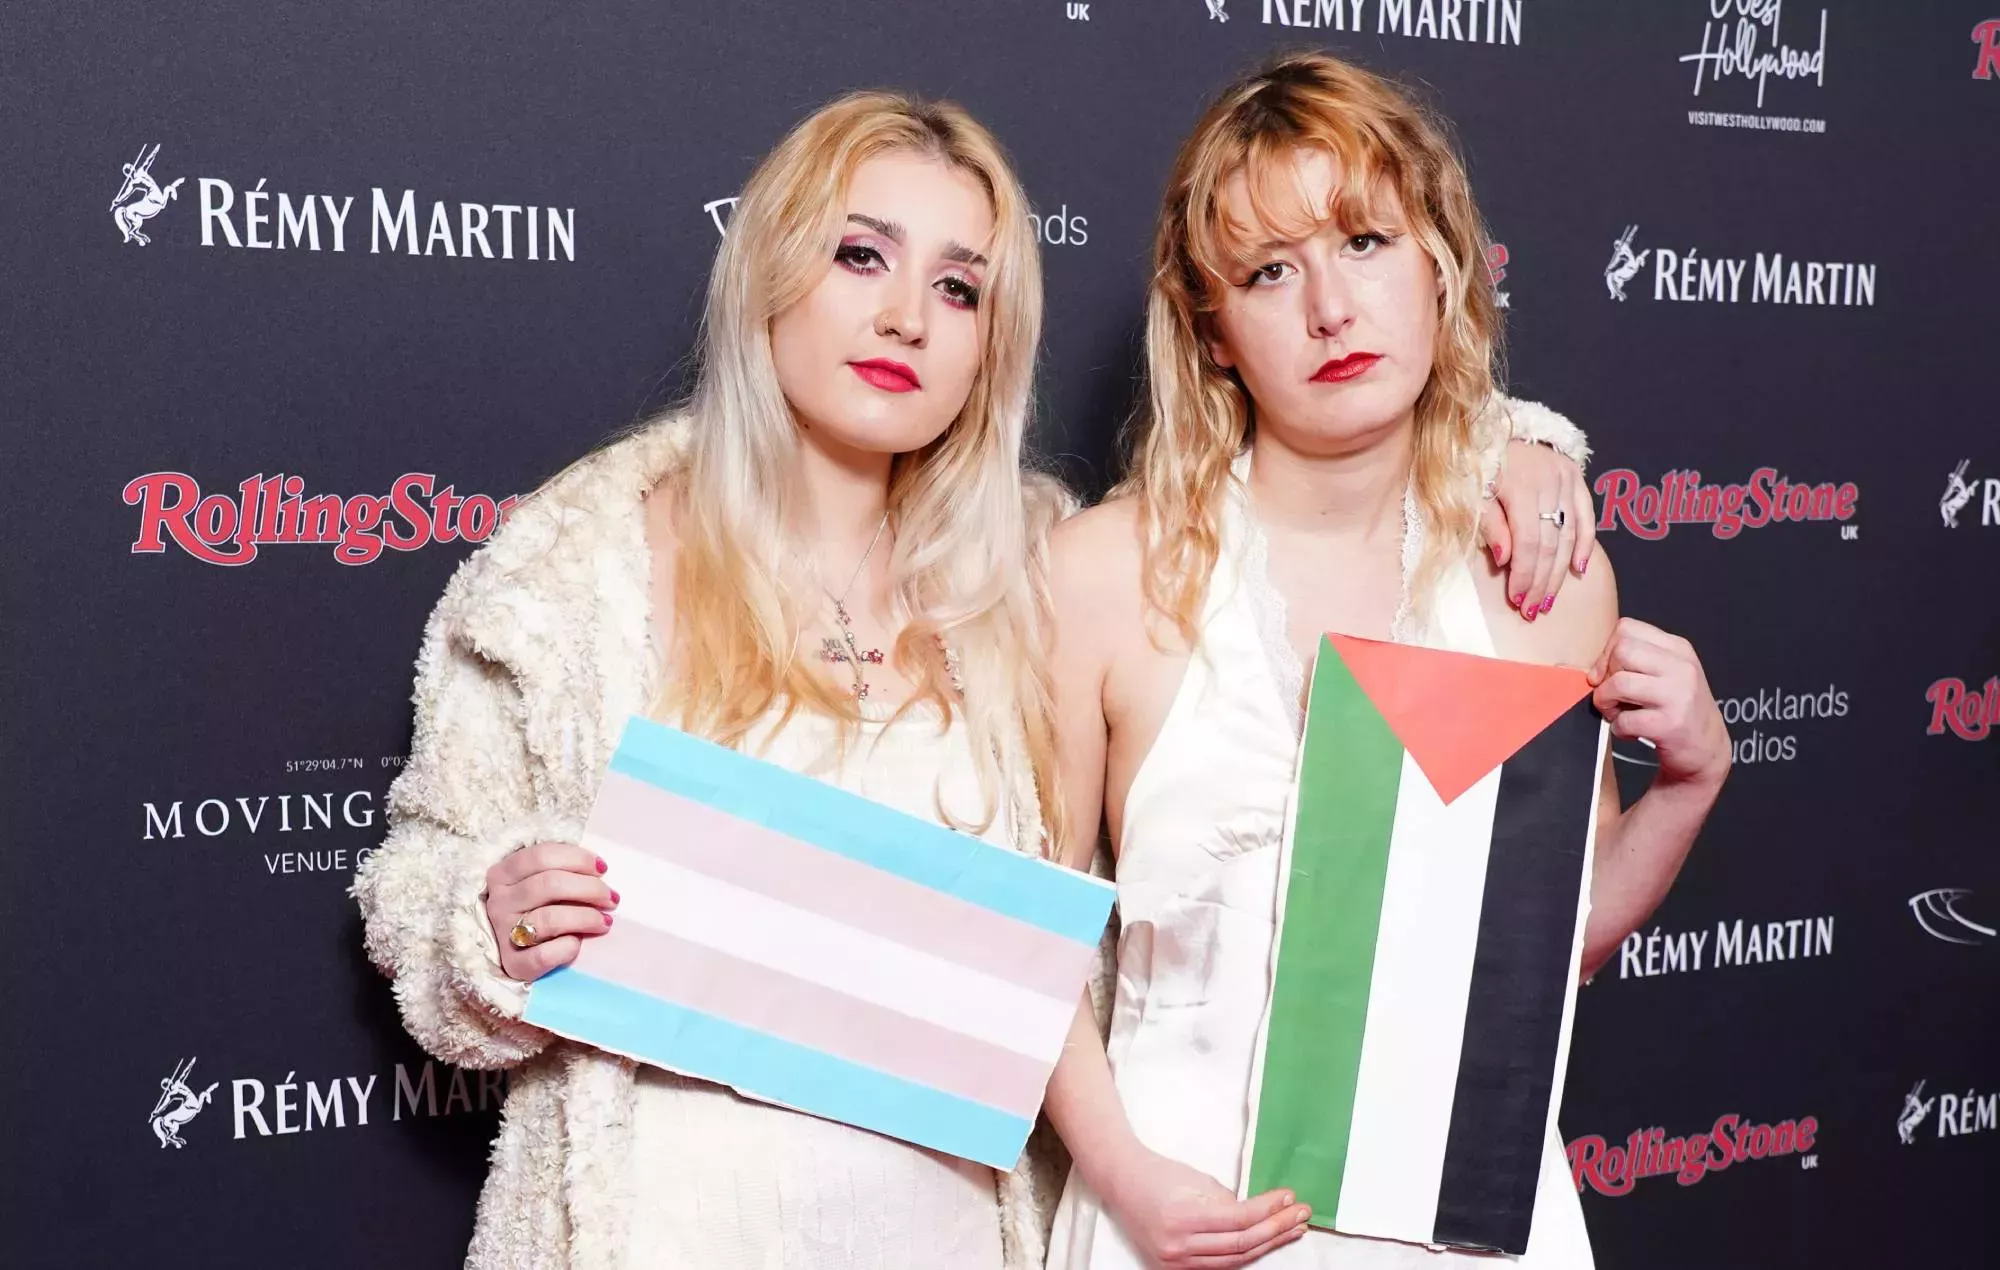 Lambrini Girls se unen a la lista de artistas que boicotean SXSW: 